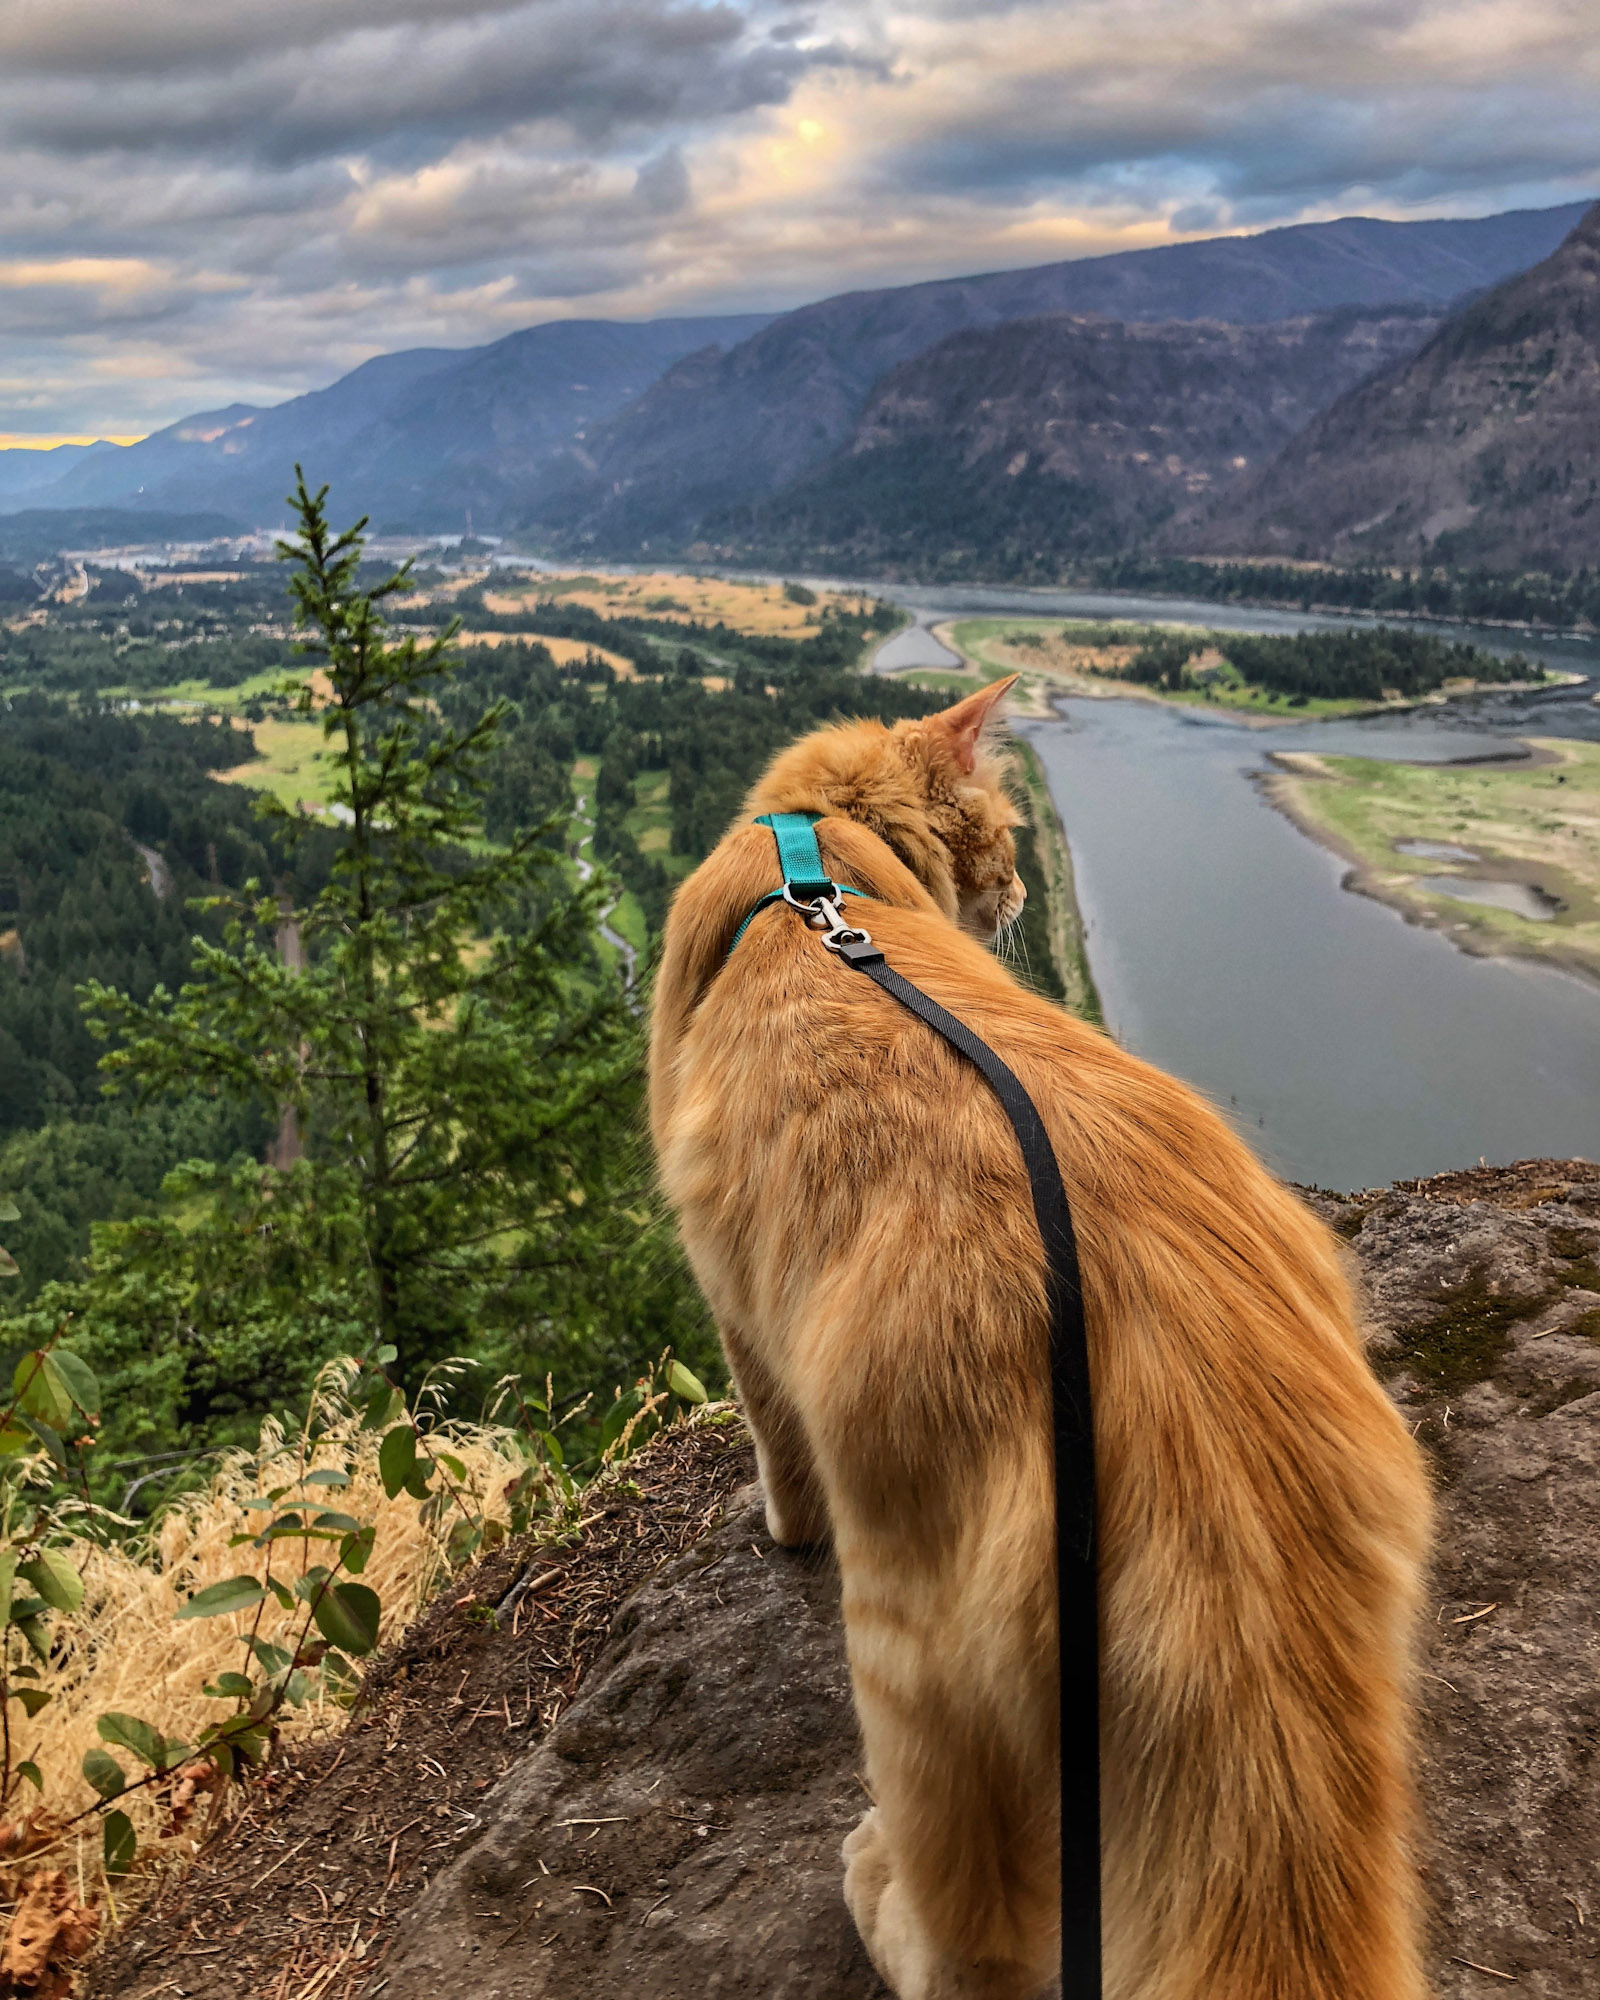 adventure cat overlooks mountain view